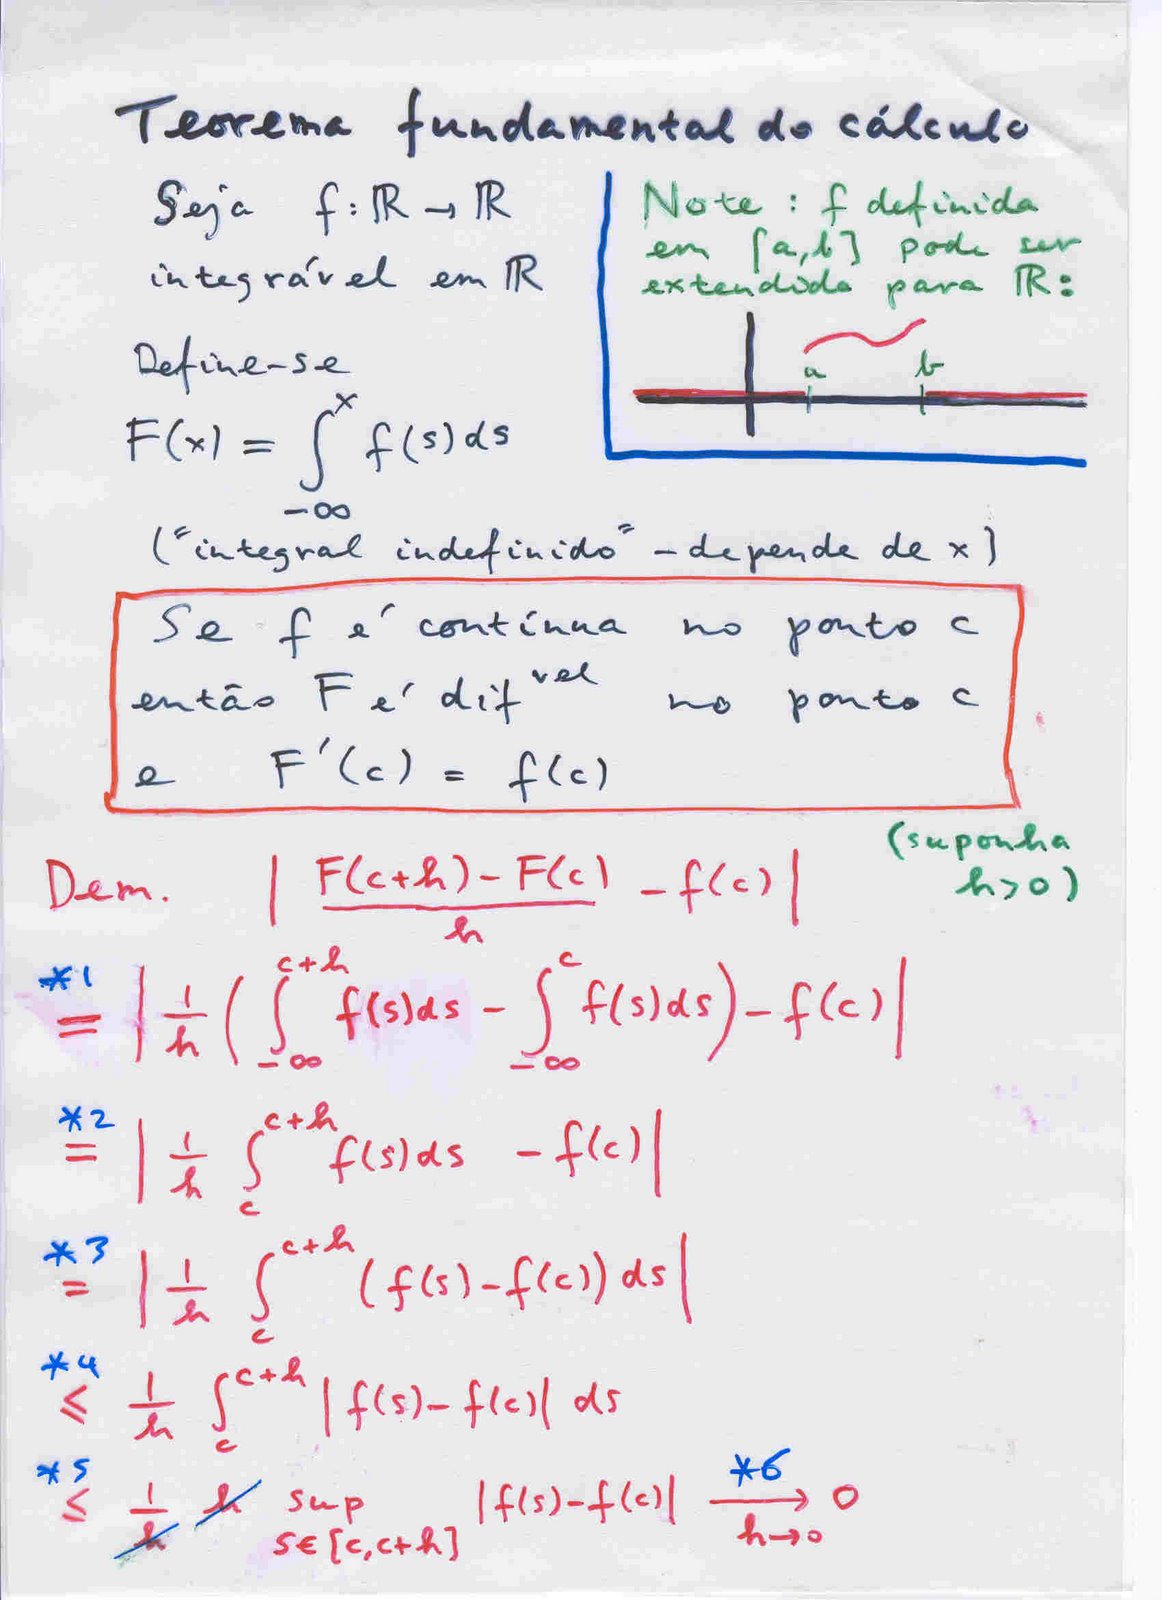 [teorema+fundamental+do+cálculo.jpg]